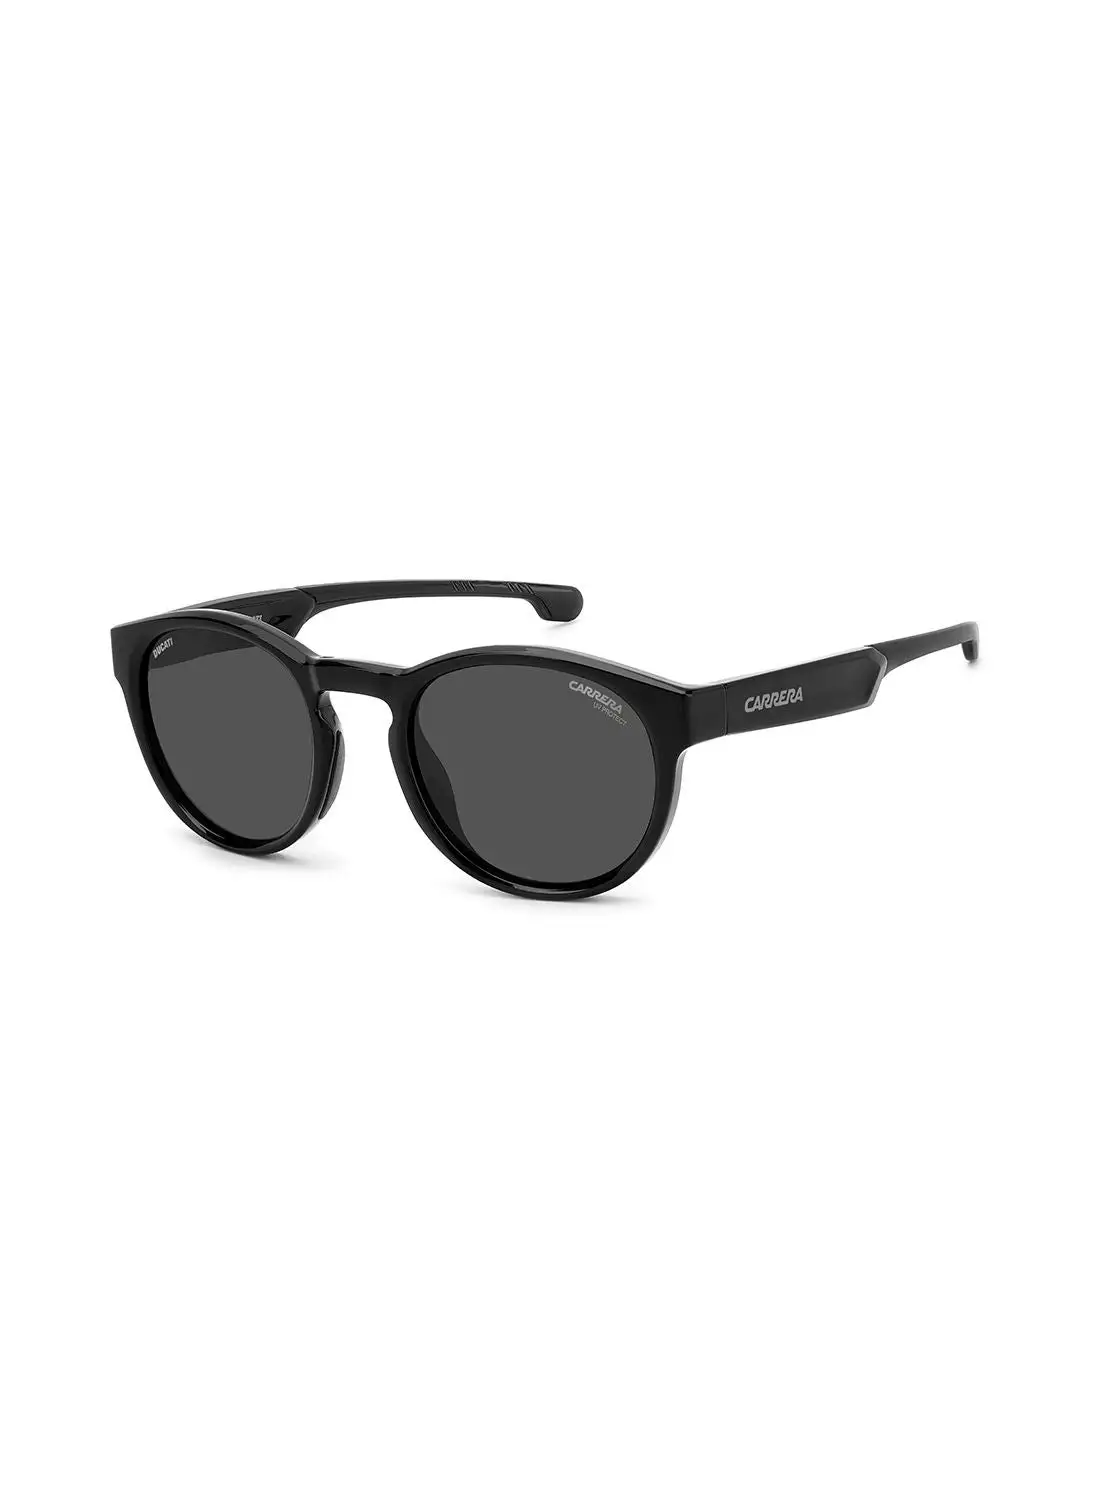 Carrera Men's UV Protection Round Sunglasses - Carduc 012/S Black 51 - Lens Size: 51 Mm